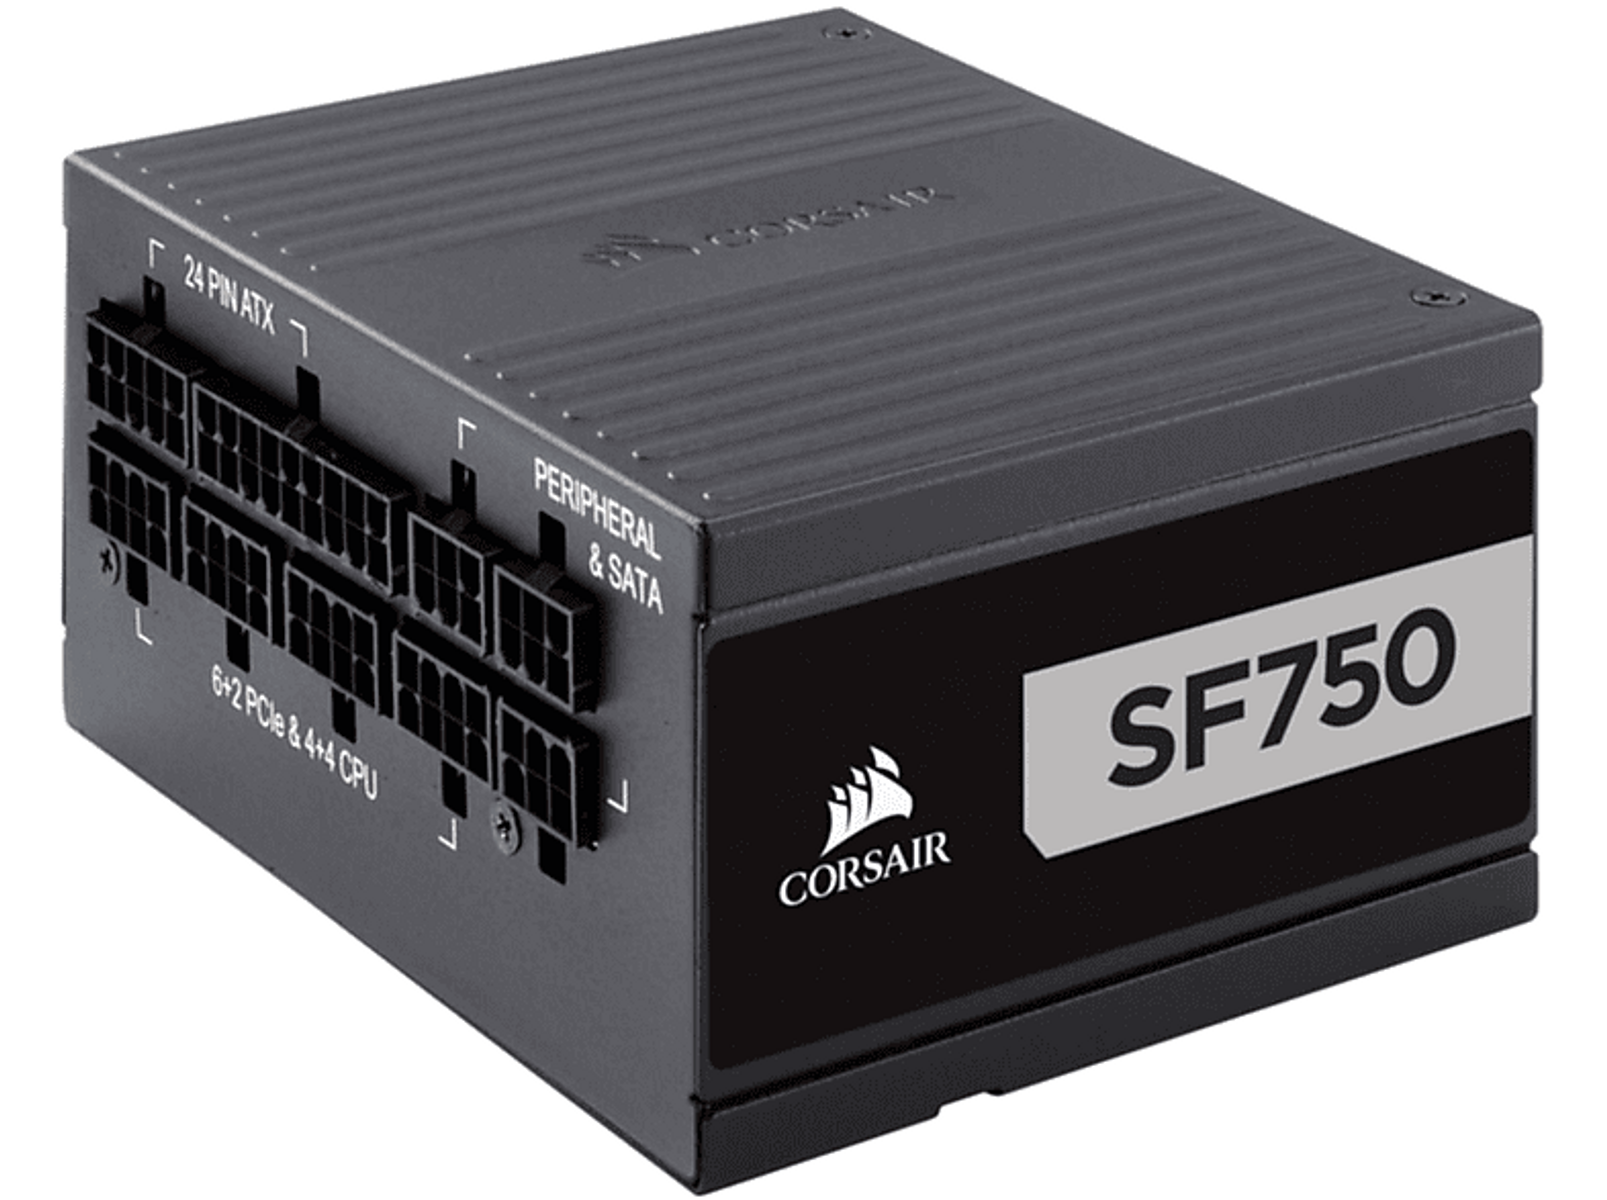 CORSAIR PC 750 SF750 Netzteil Watt